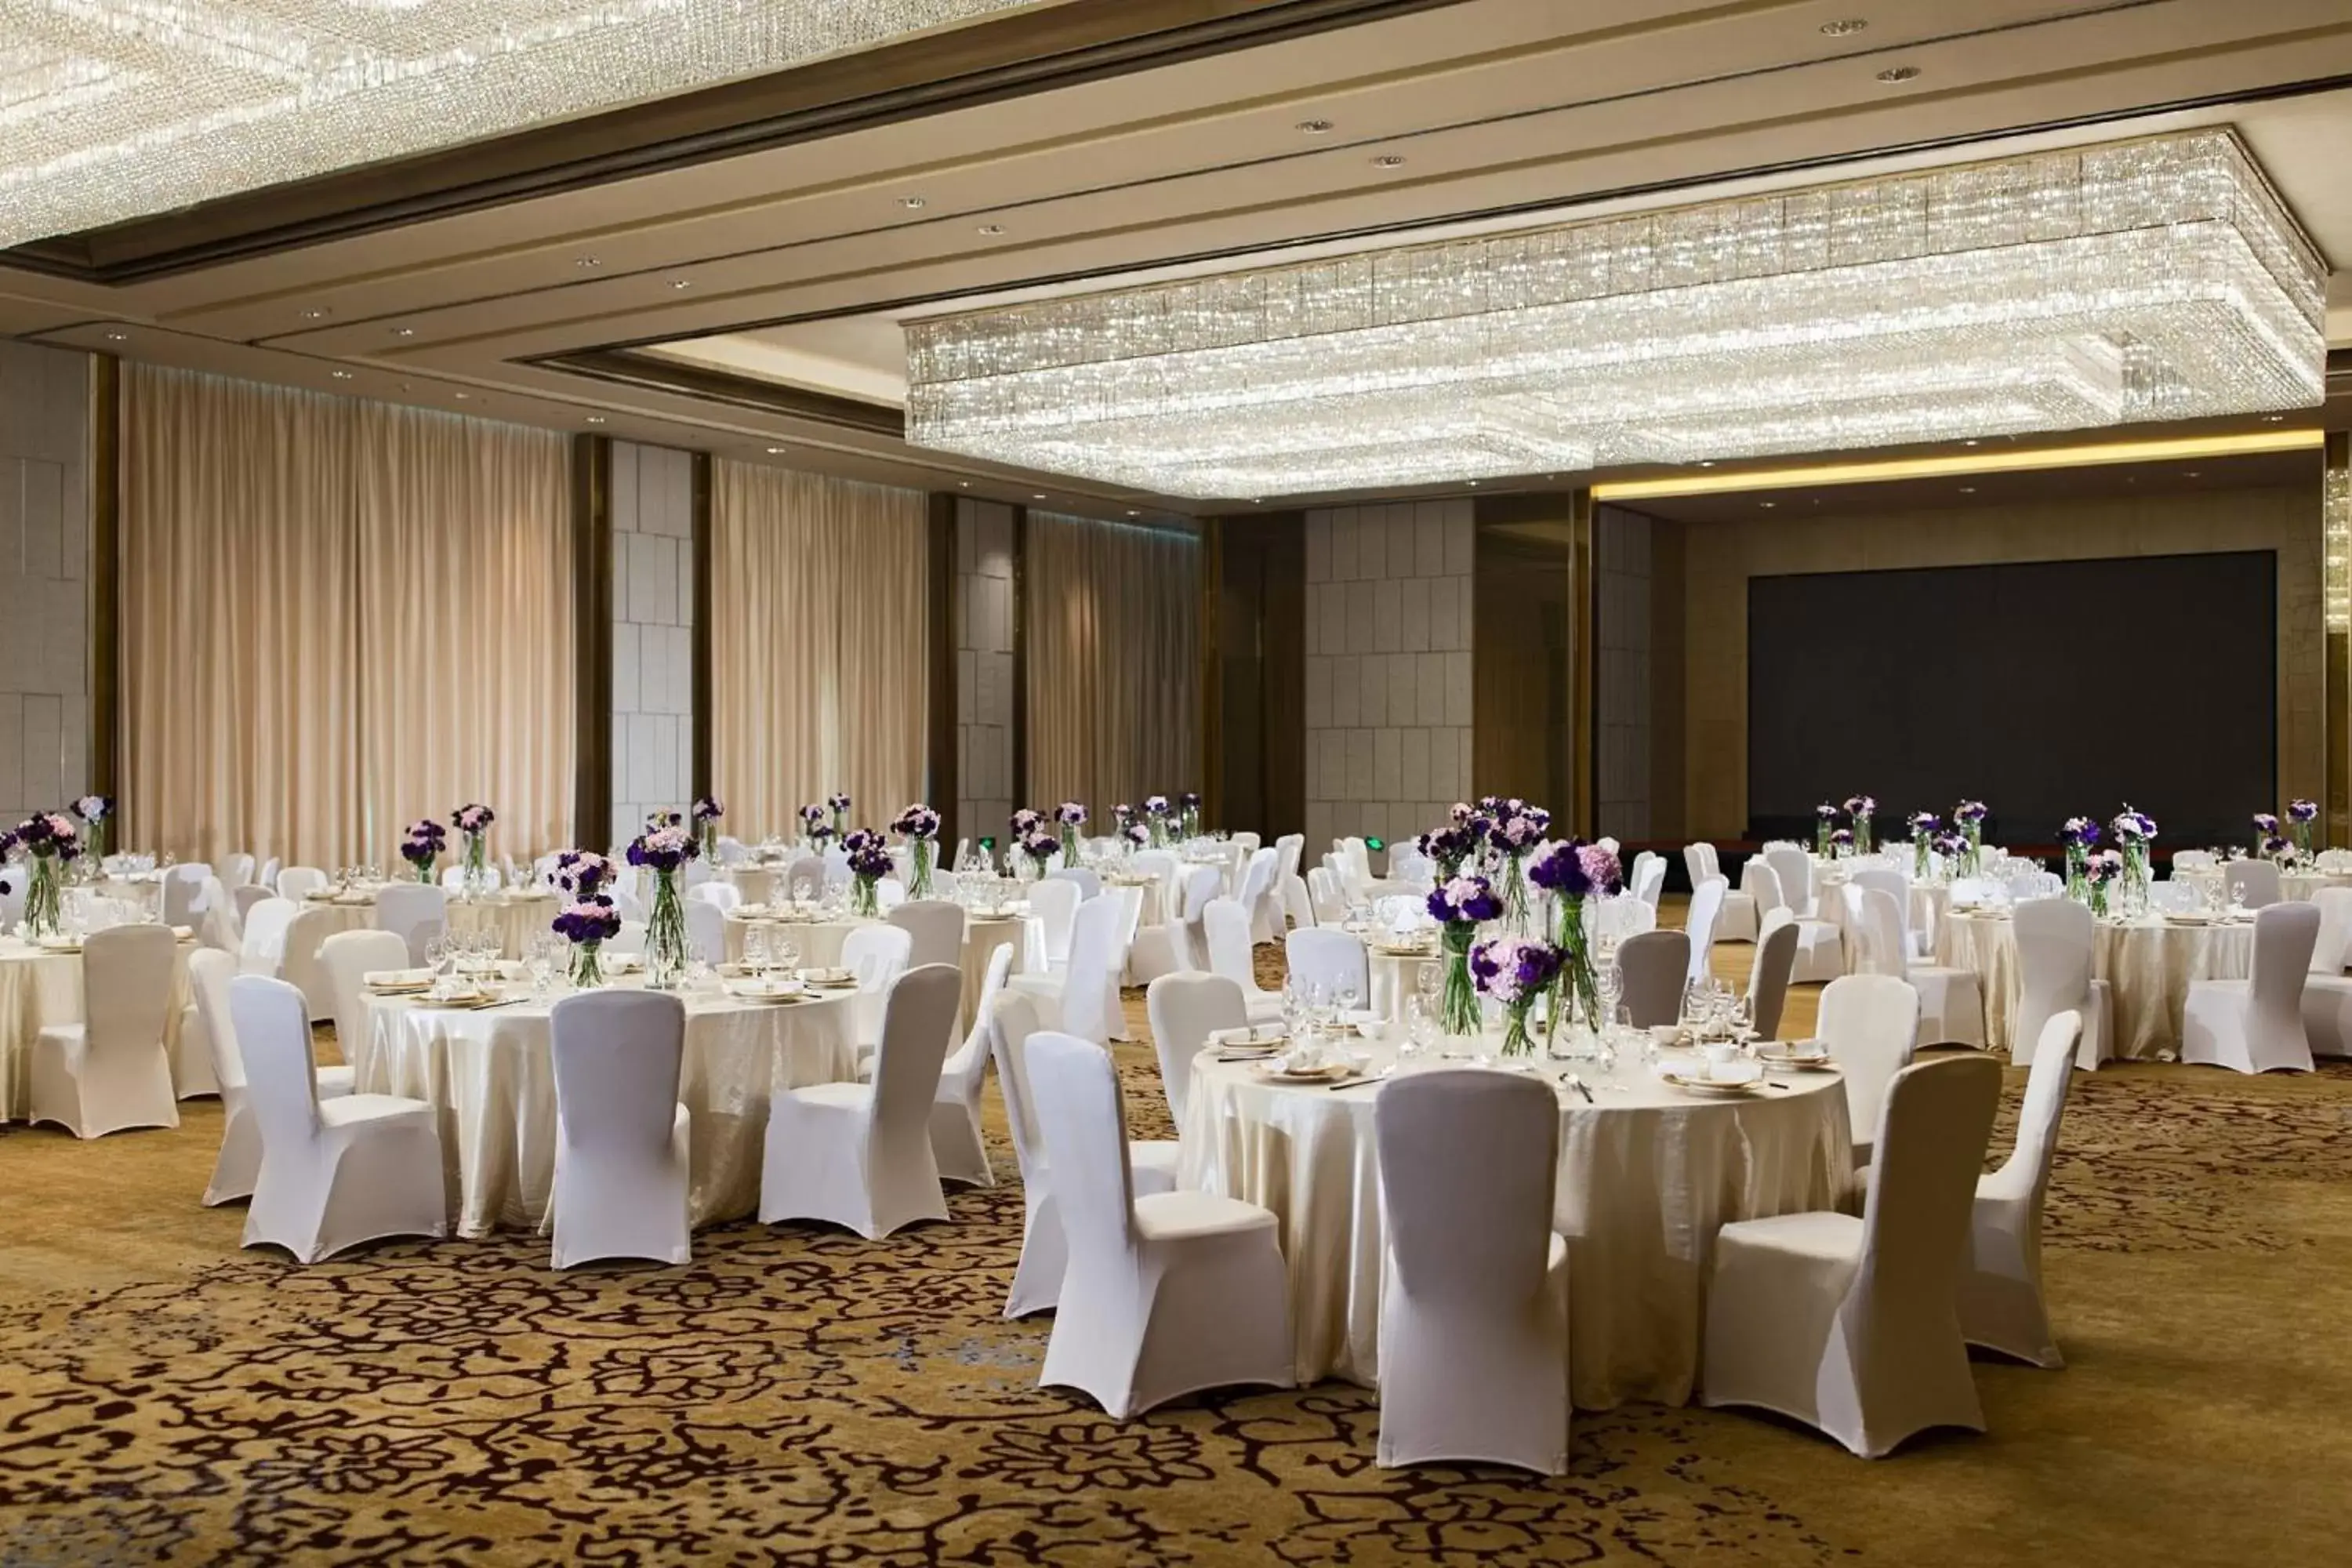 Banquet/Function facilities, Banquet Facilities in Renaissance Suzhou Hotel